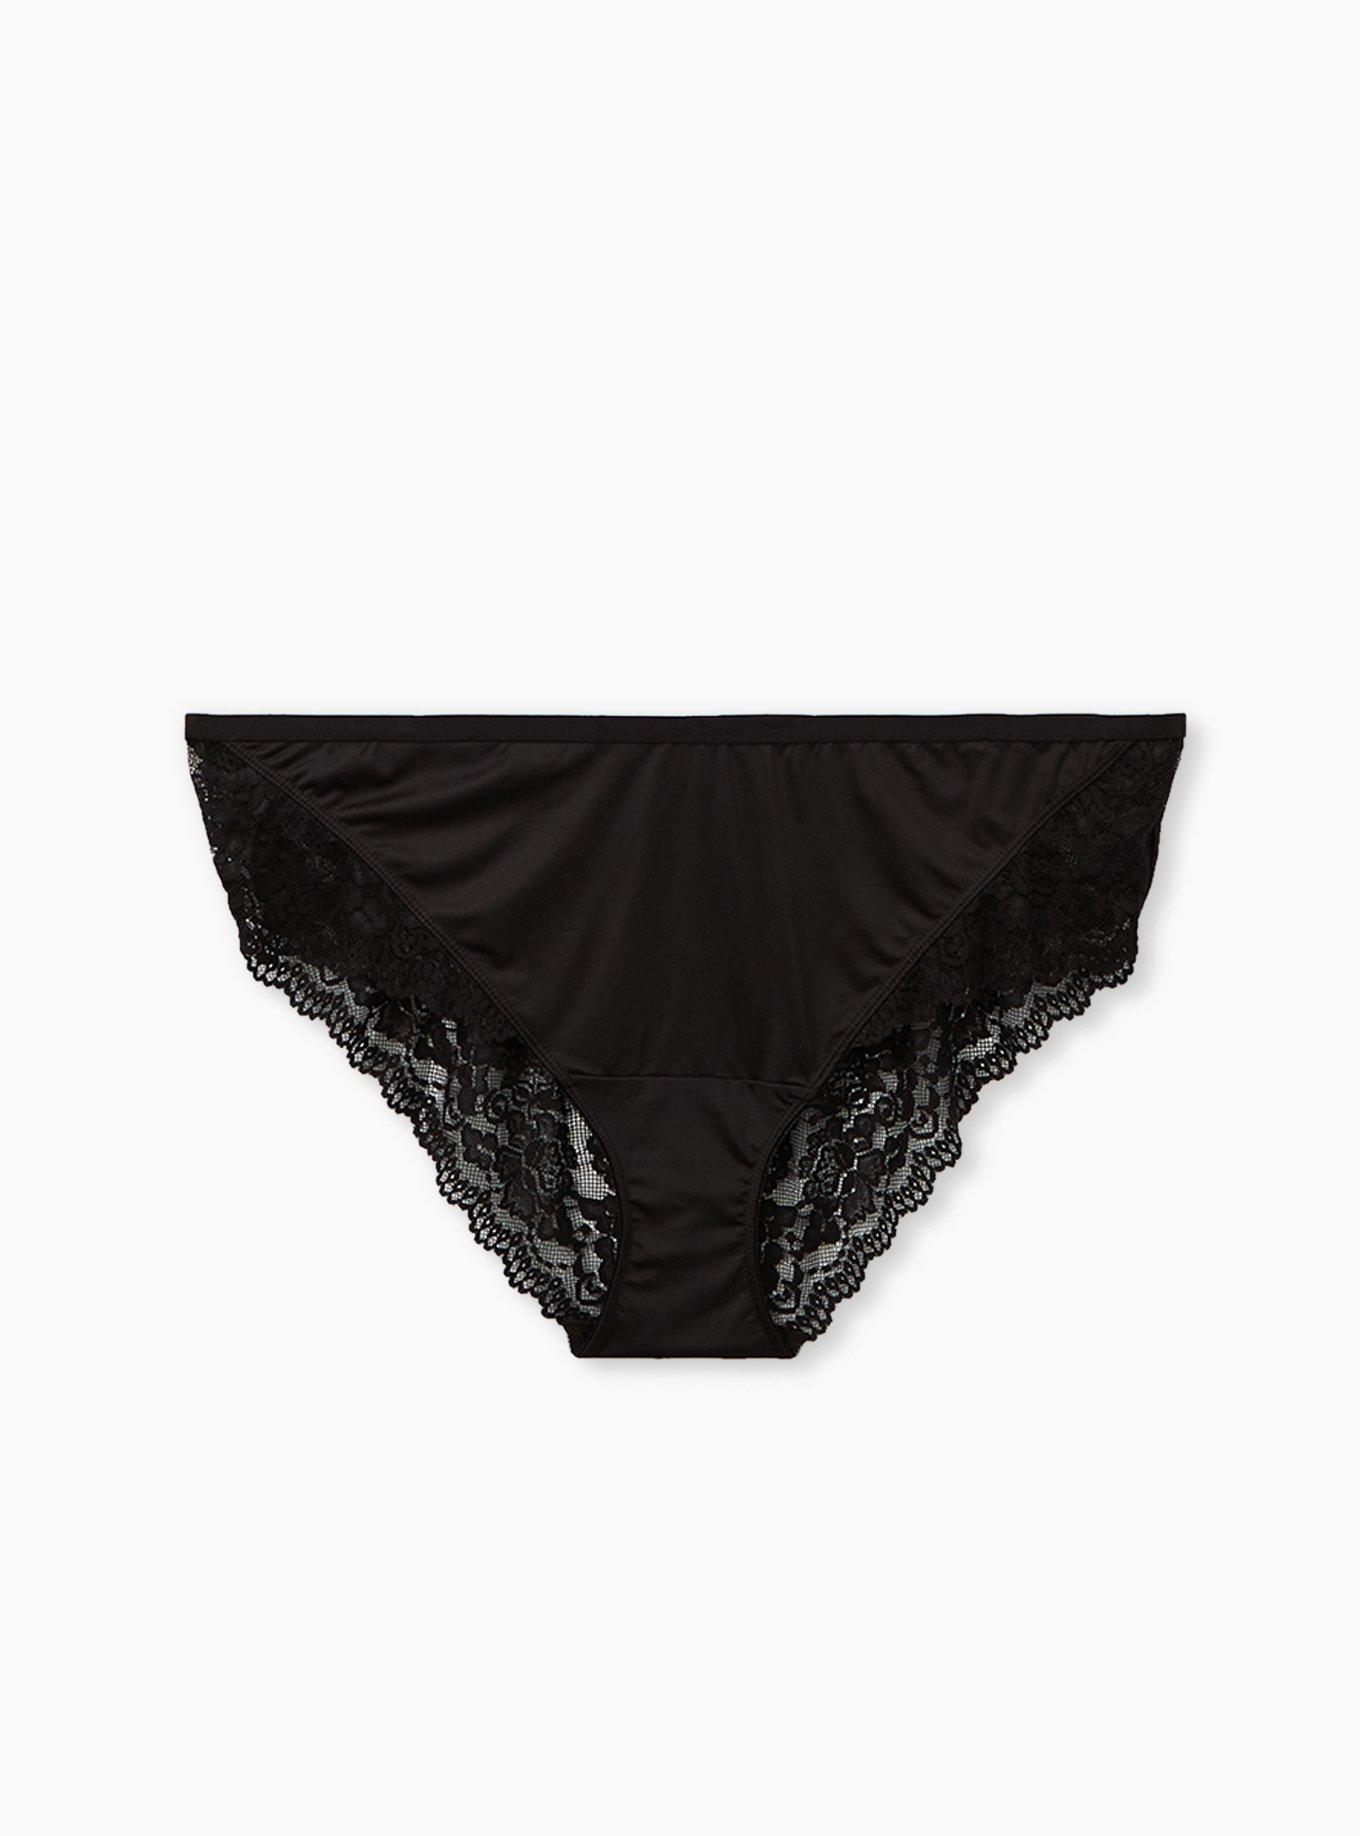 Black Lace Knickers See Through Erotic Panties Sheer Panties Boudoir  Lingerie Plus Size Naughty Knickers Wife Gift Honeymoon Lingerie -   Canada